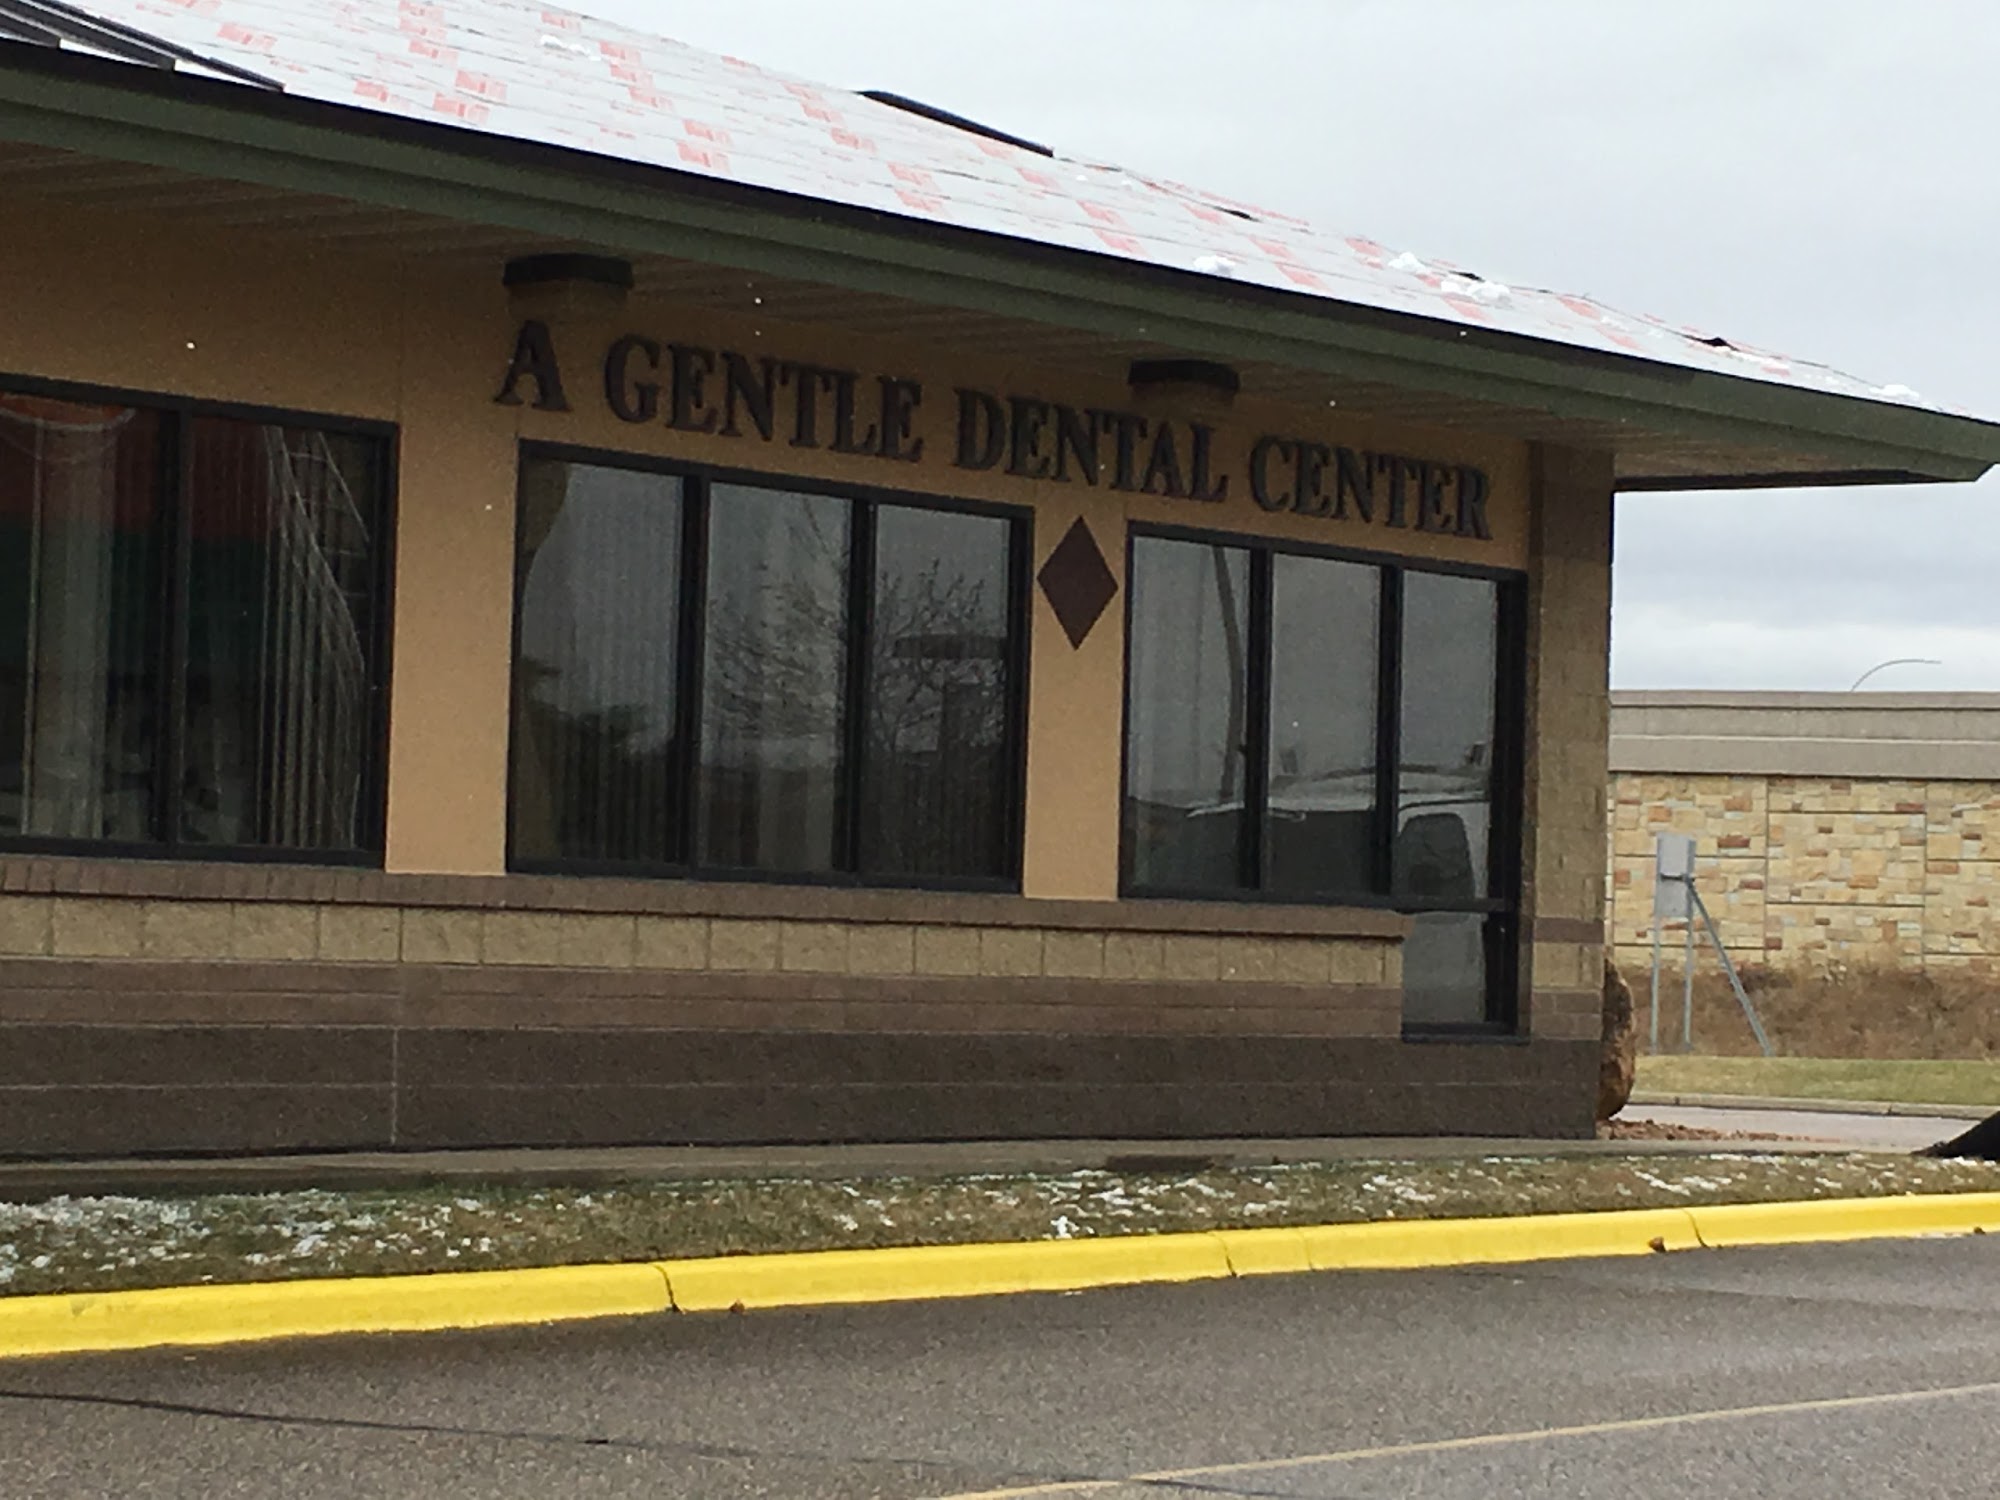 A Gentle Dental Center